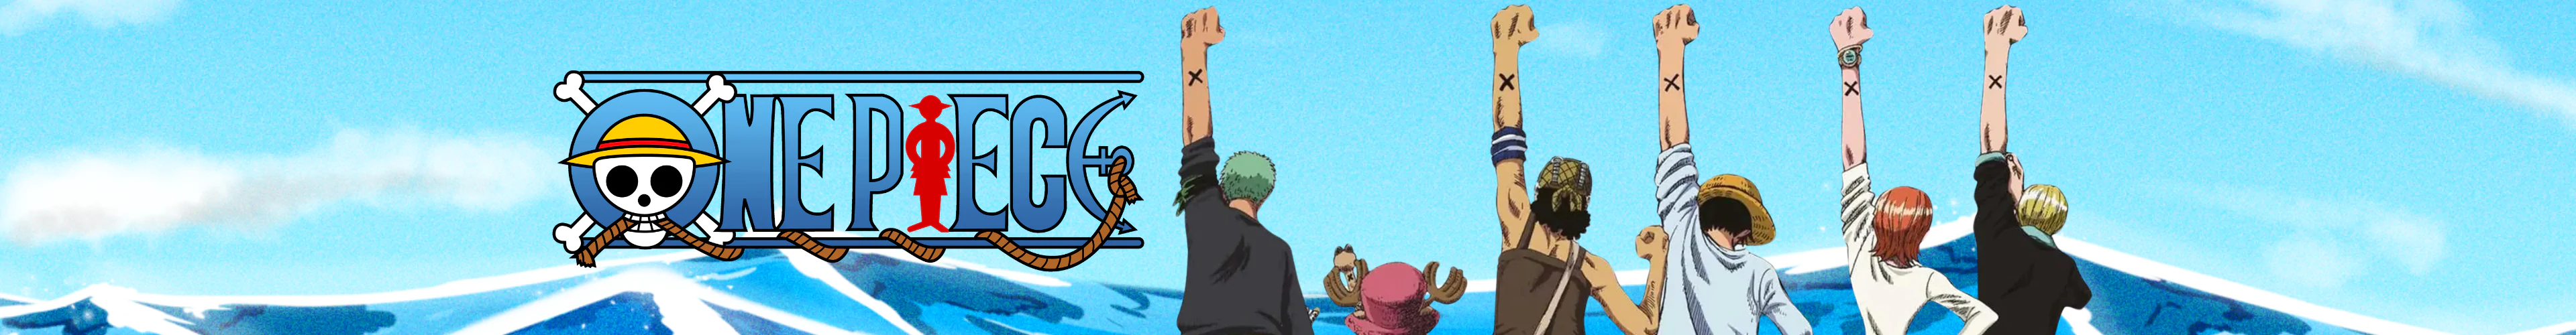 One Piece swim gears banner